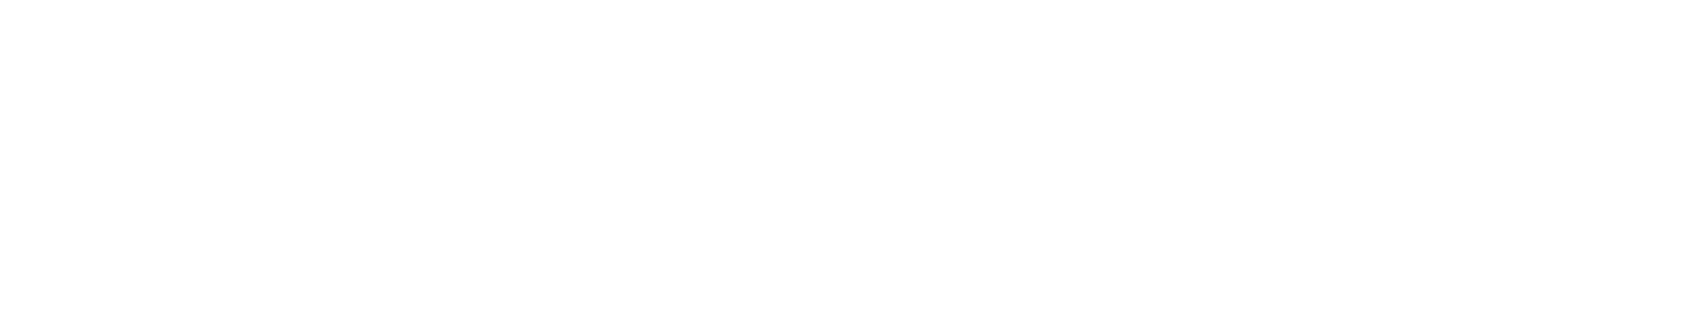 GlowPro - Brand & Corp Experience